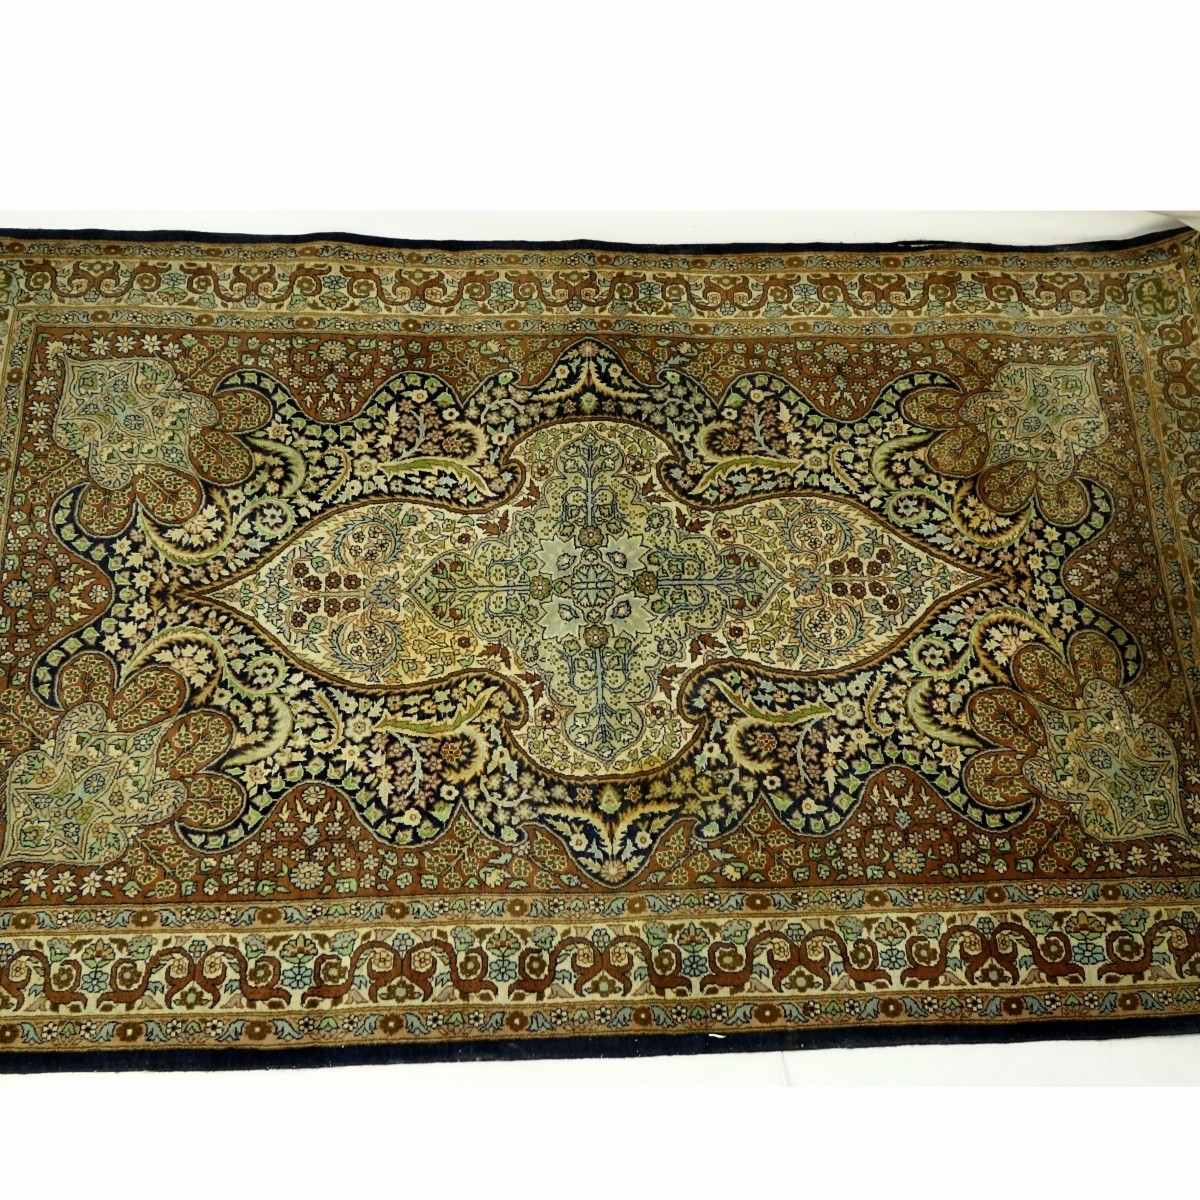 Semi Antique Persian Rug. Intricate floral pattern